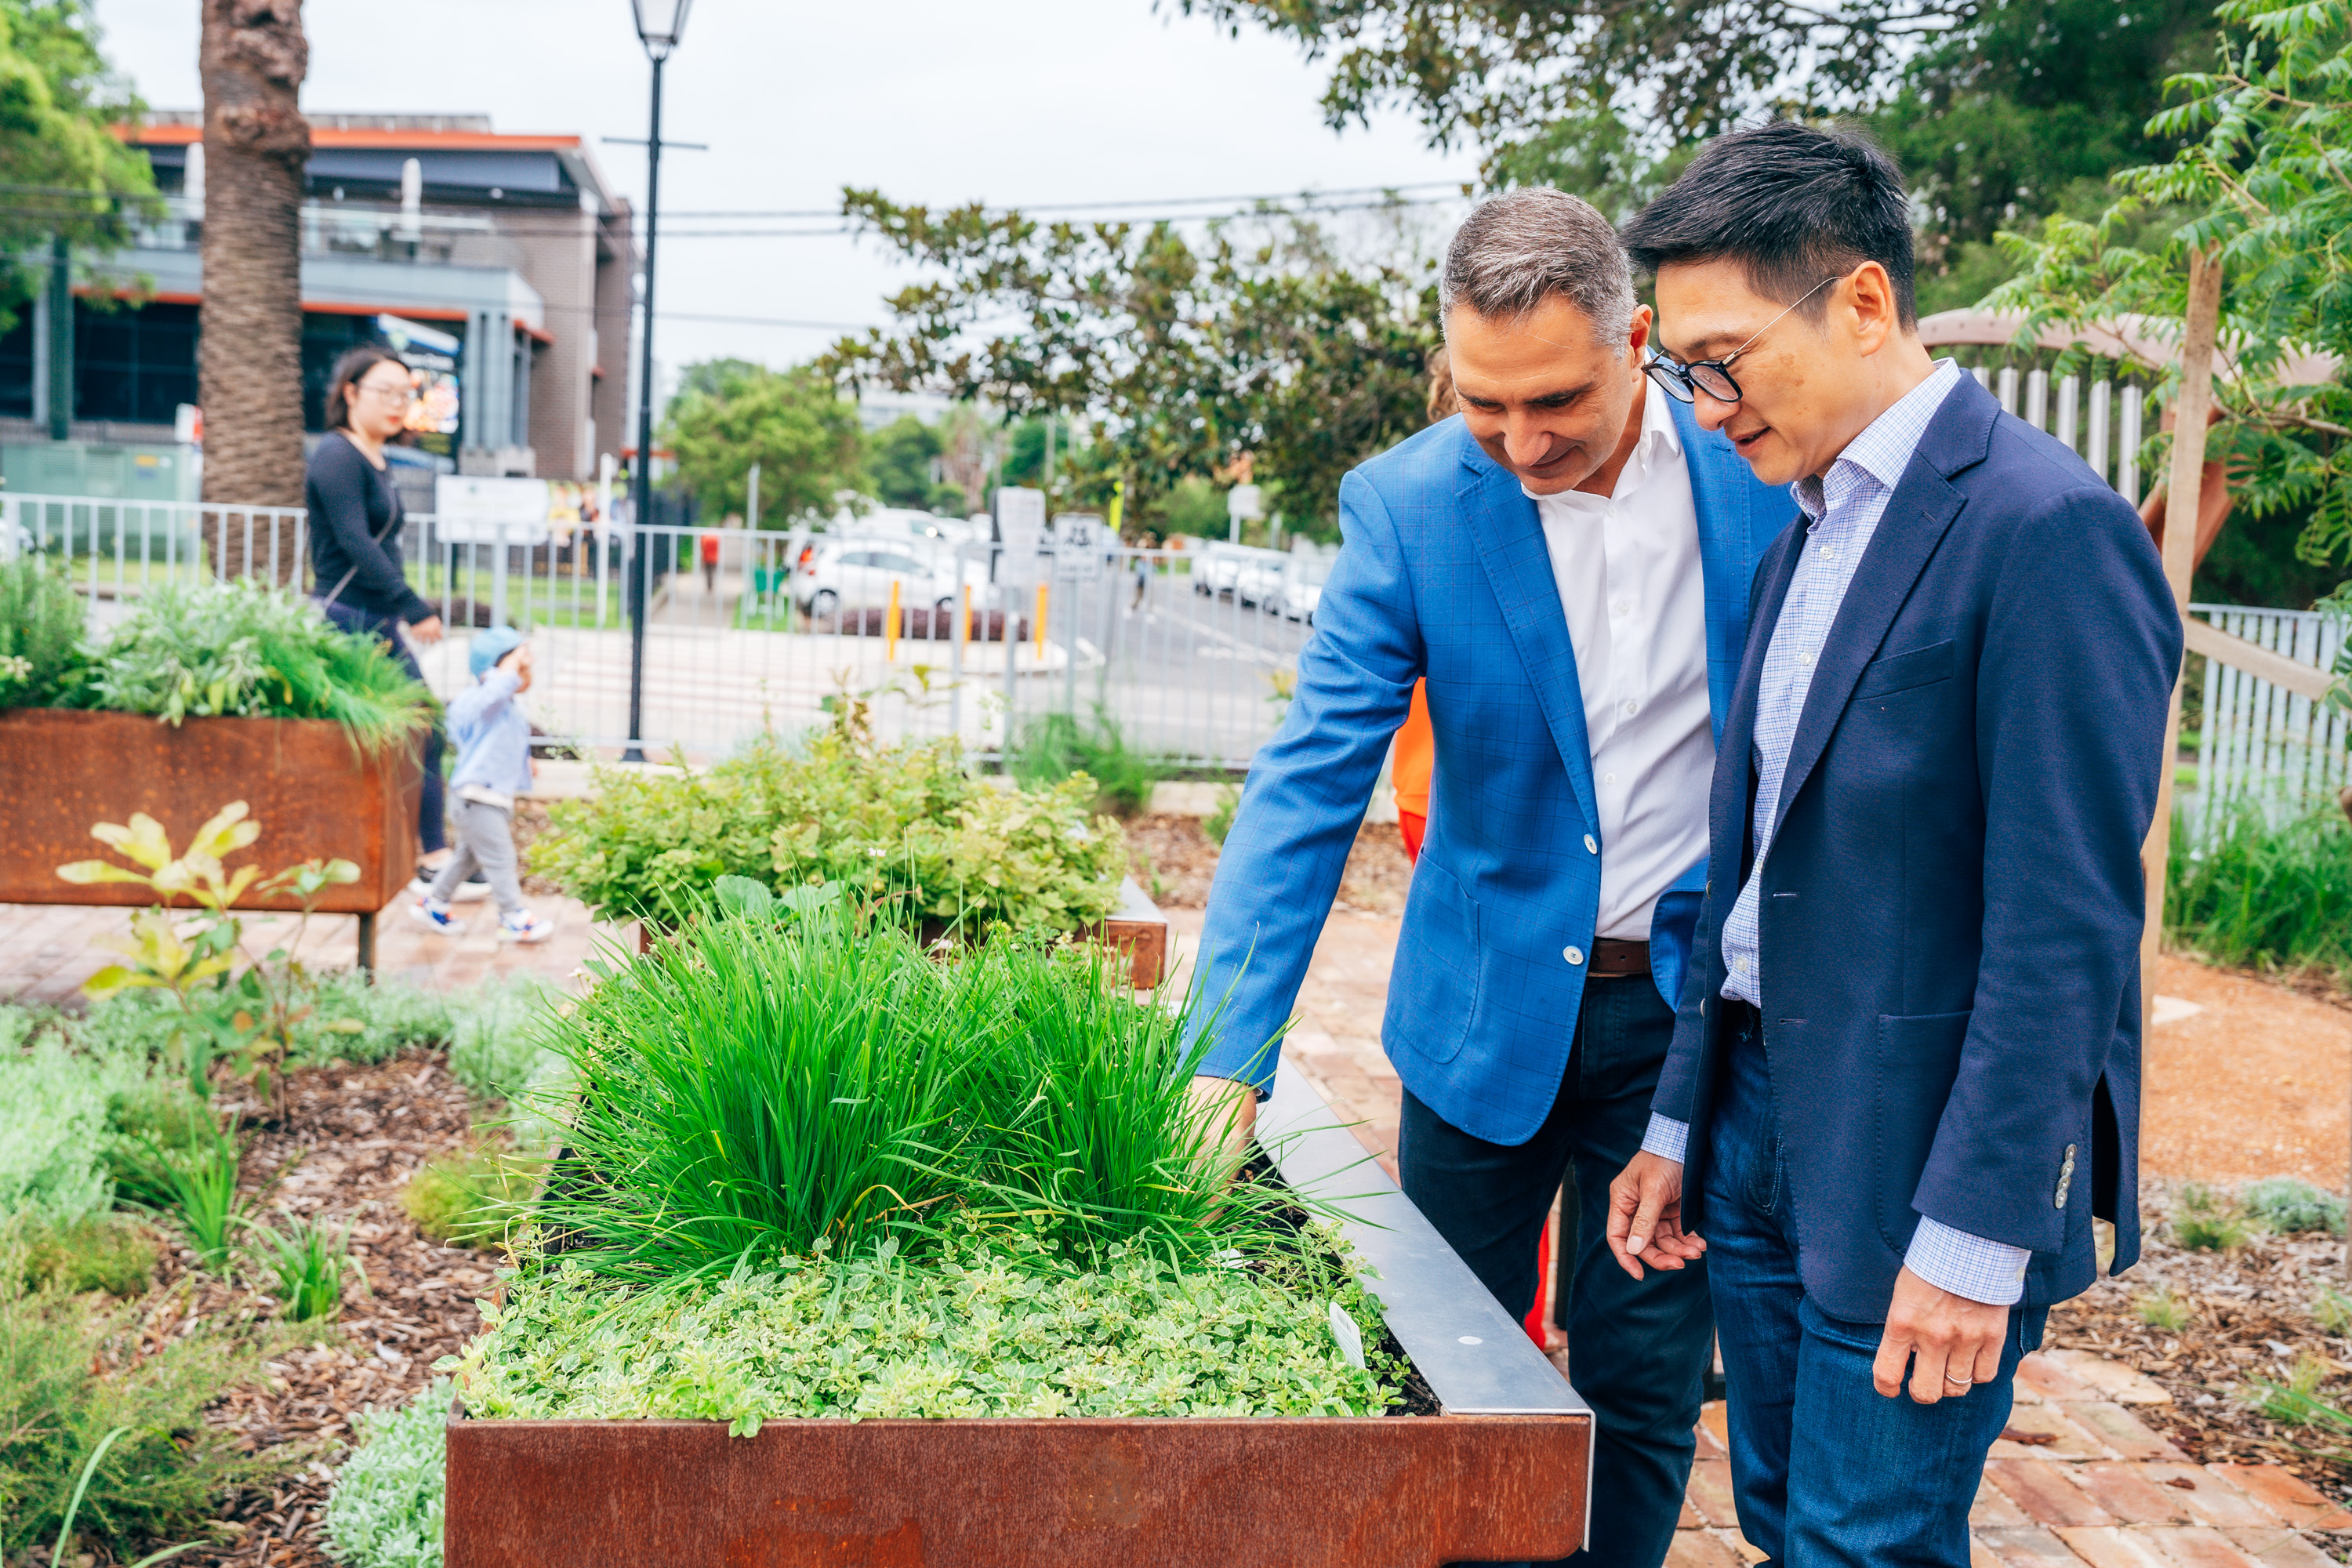 Mayor and MP in sensory garden